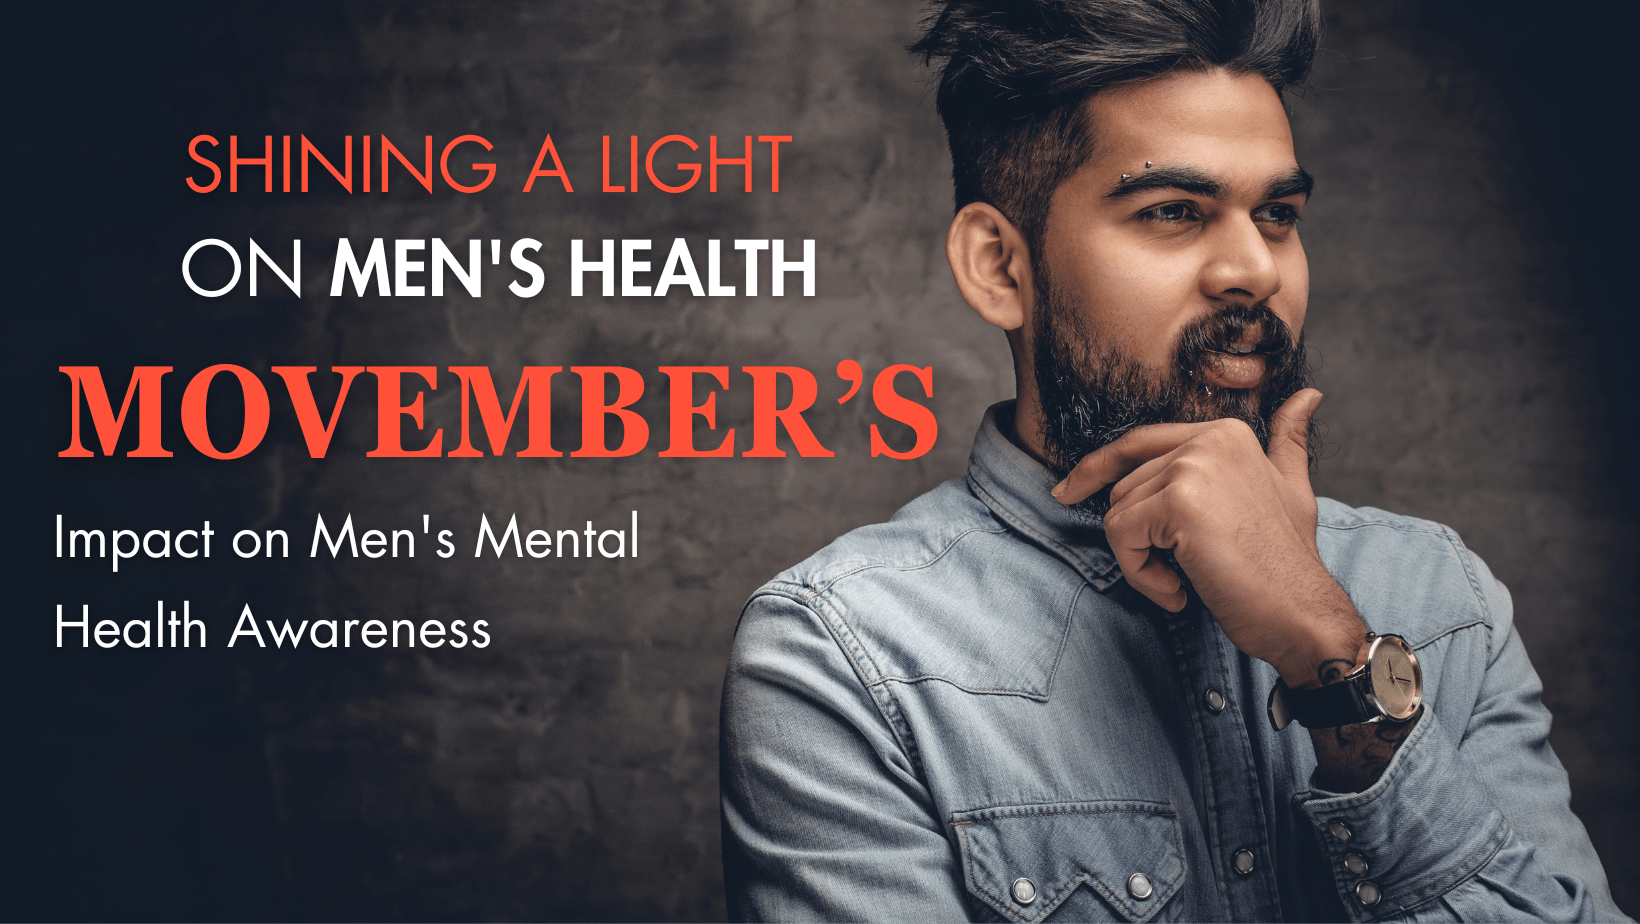 Shining a Light on Men’s Health: Movember’s Impact on Men’s Mental Health Awareness